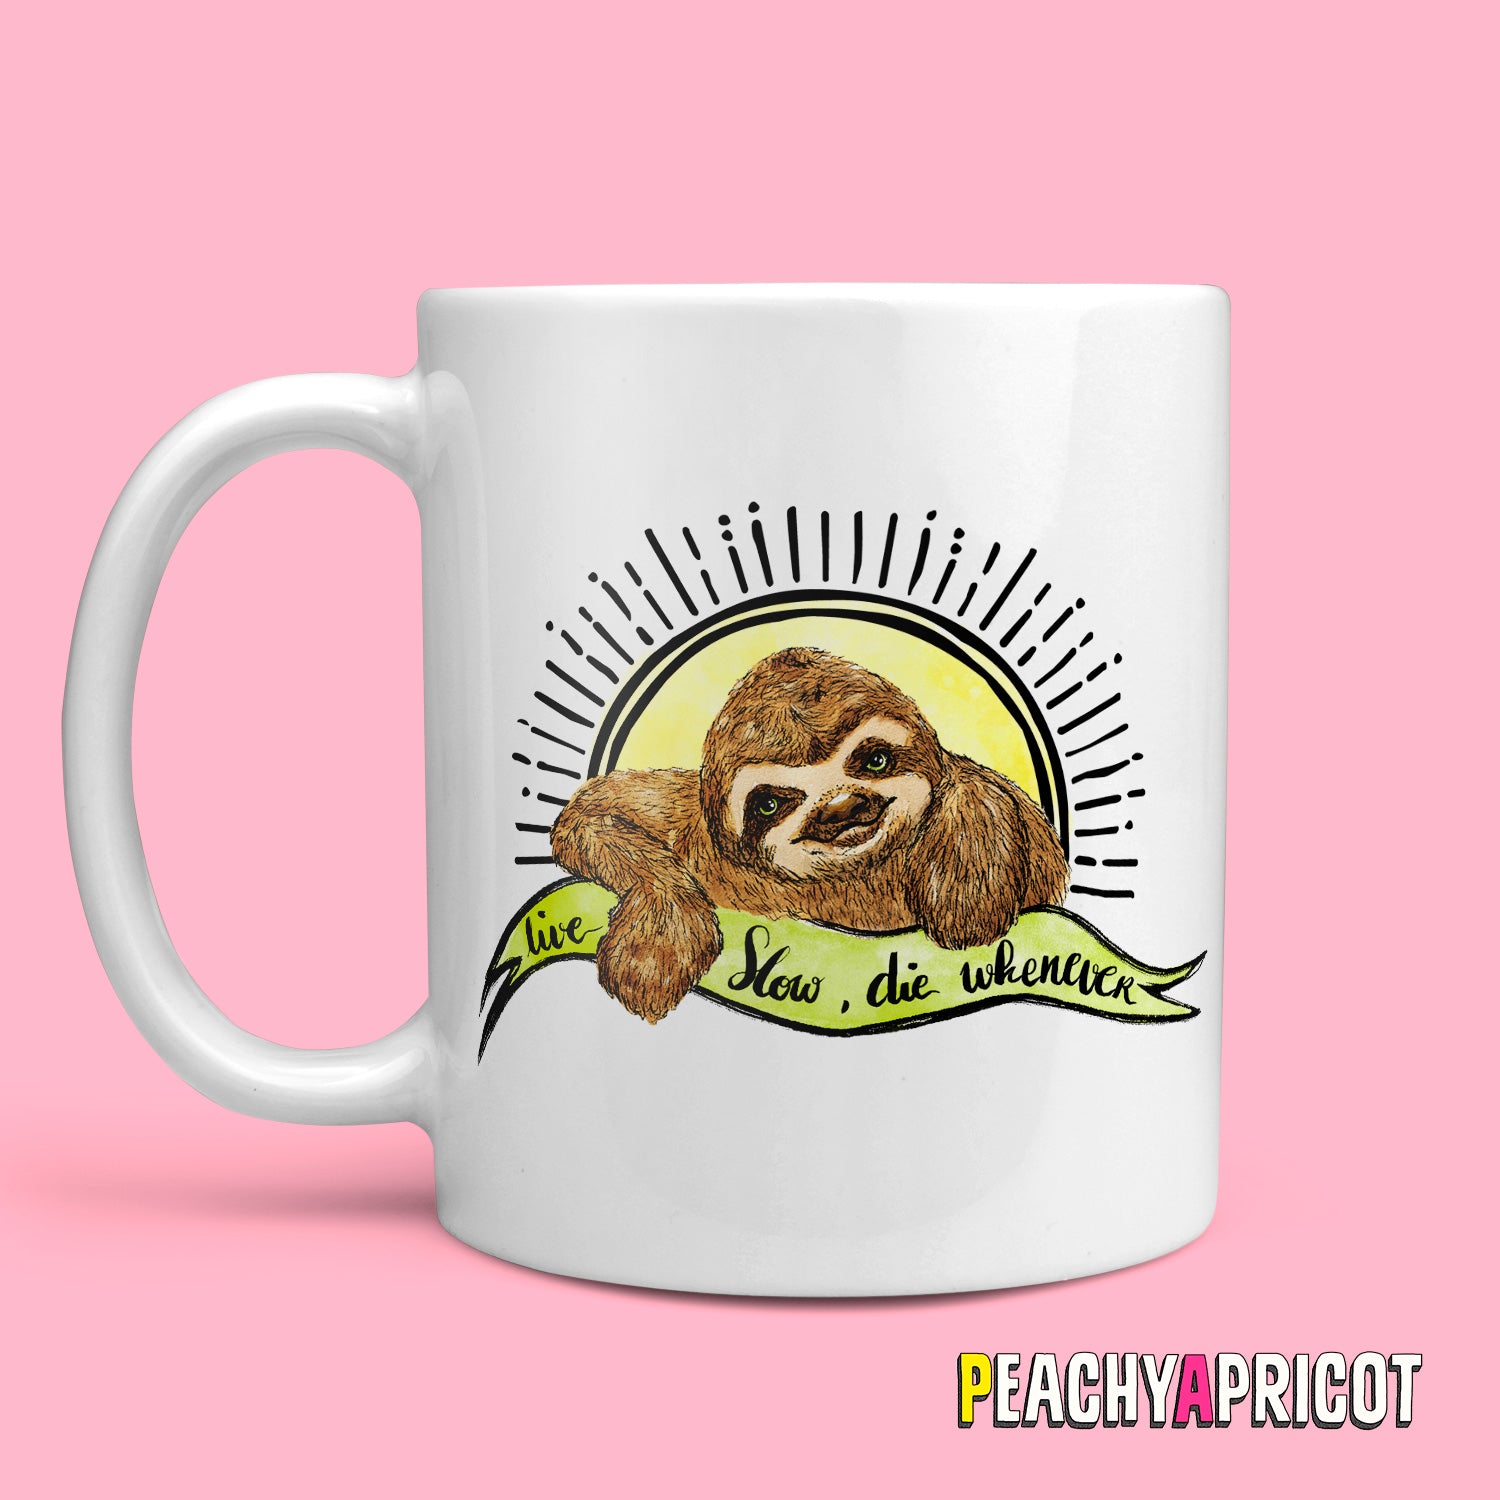 peachyapricot live slow die whenever sloth mug